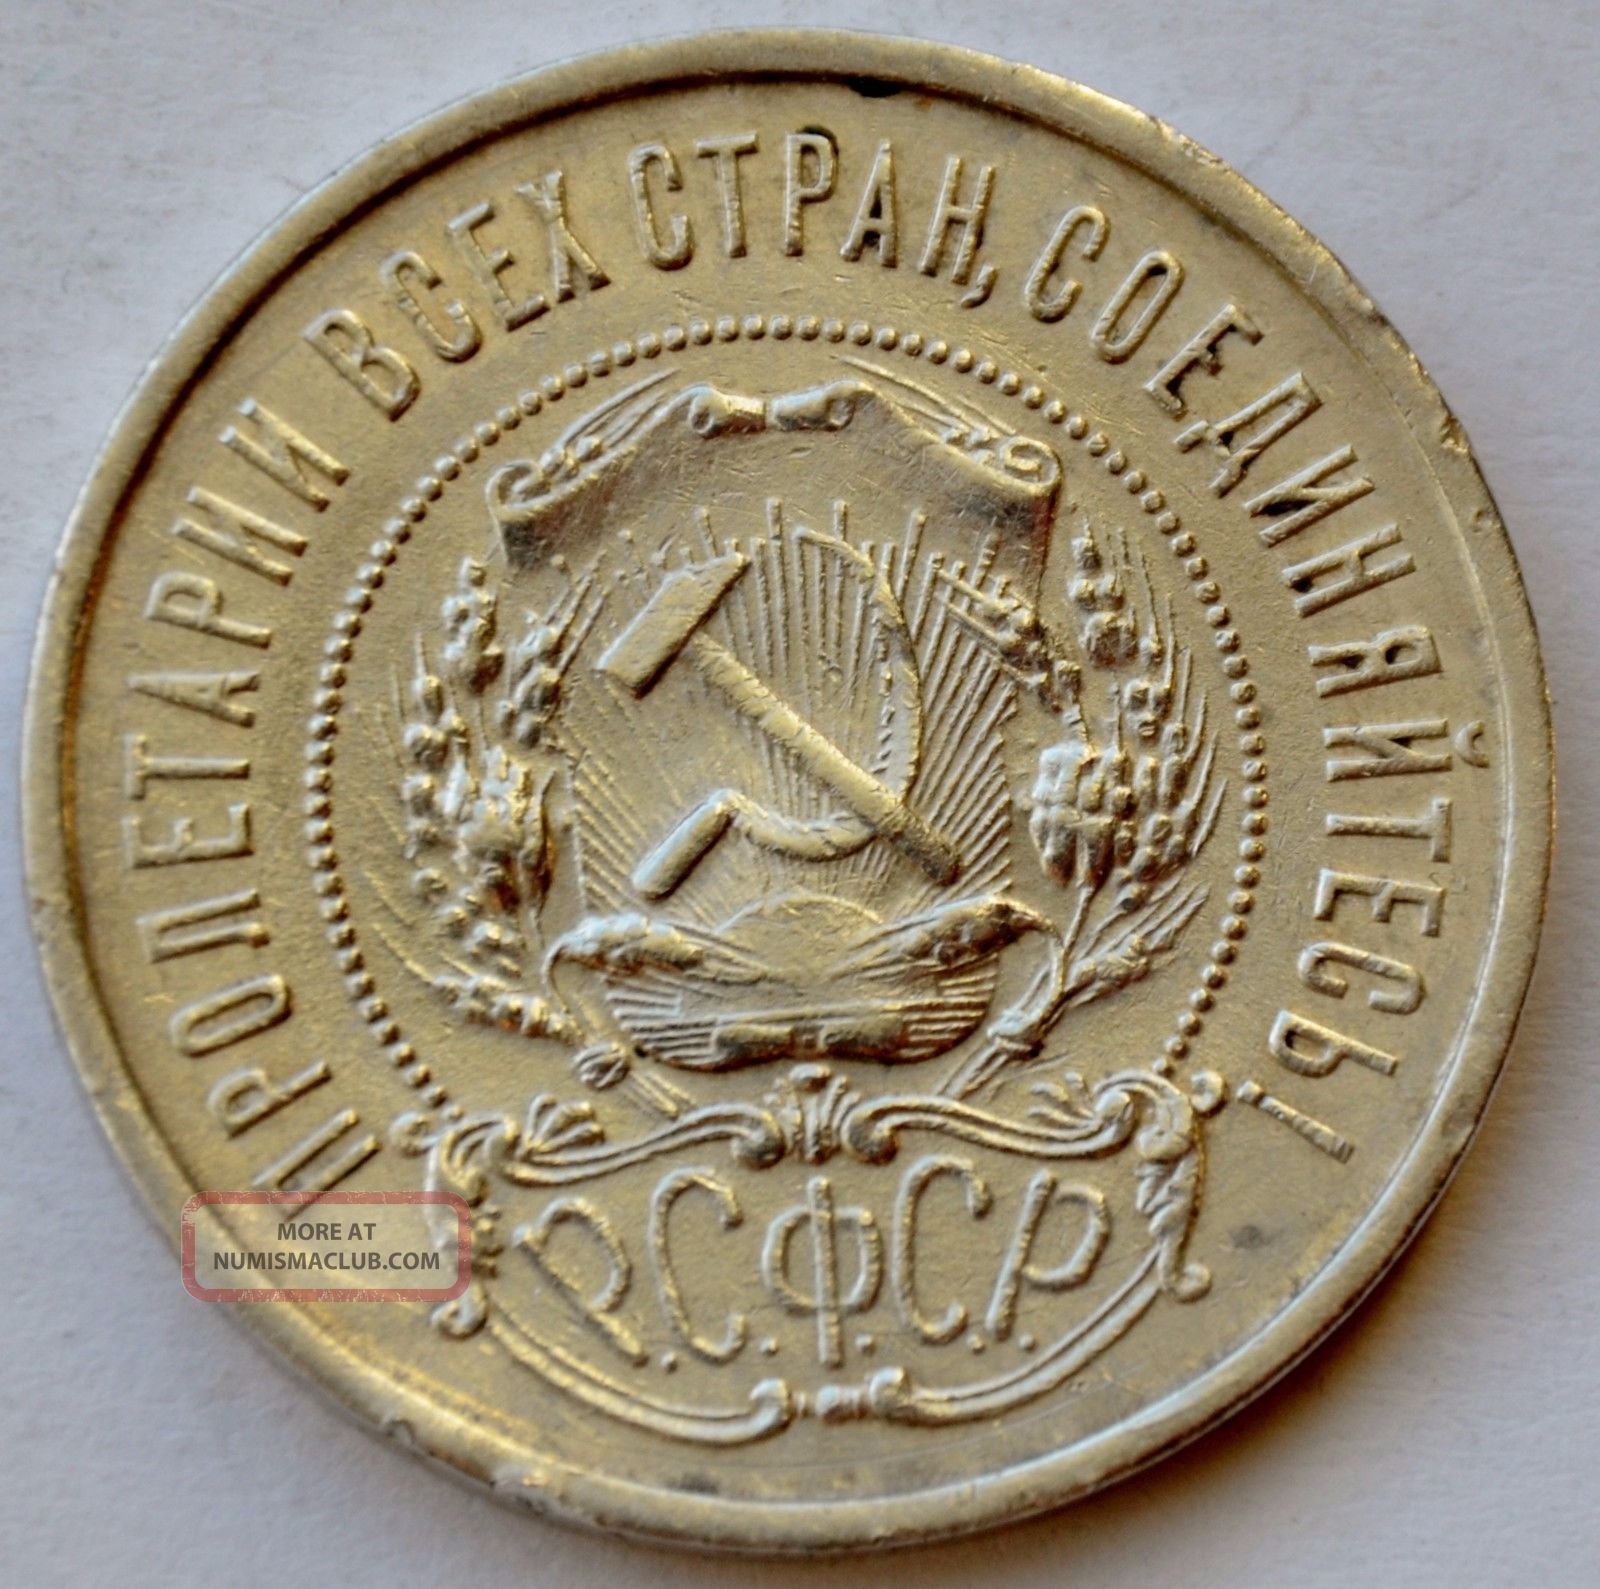 https://numismaclub.com/imgs/a/h/u/o/k/50_kopek_1922_communist_russia_lenin_silver_coin_2_lgw.jpg